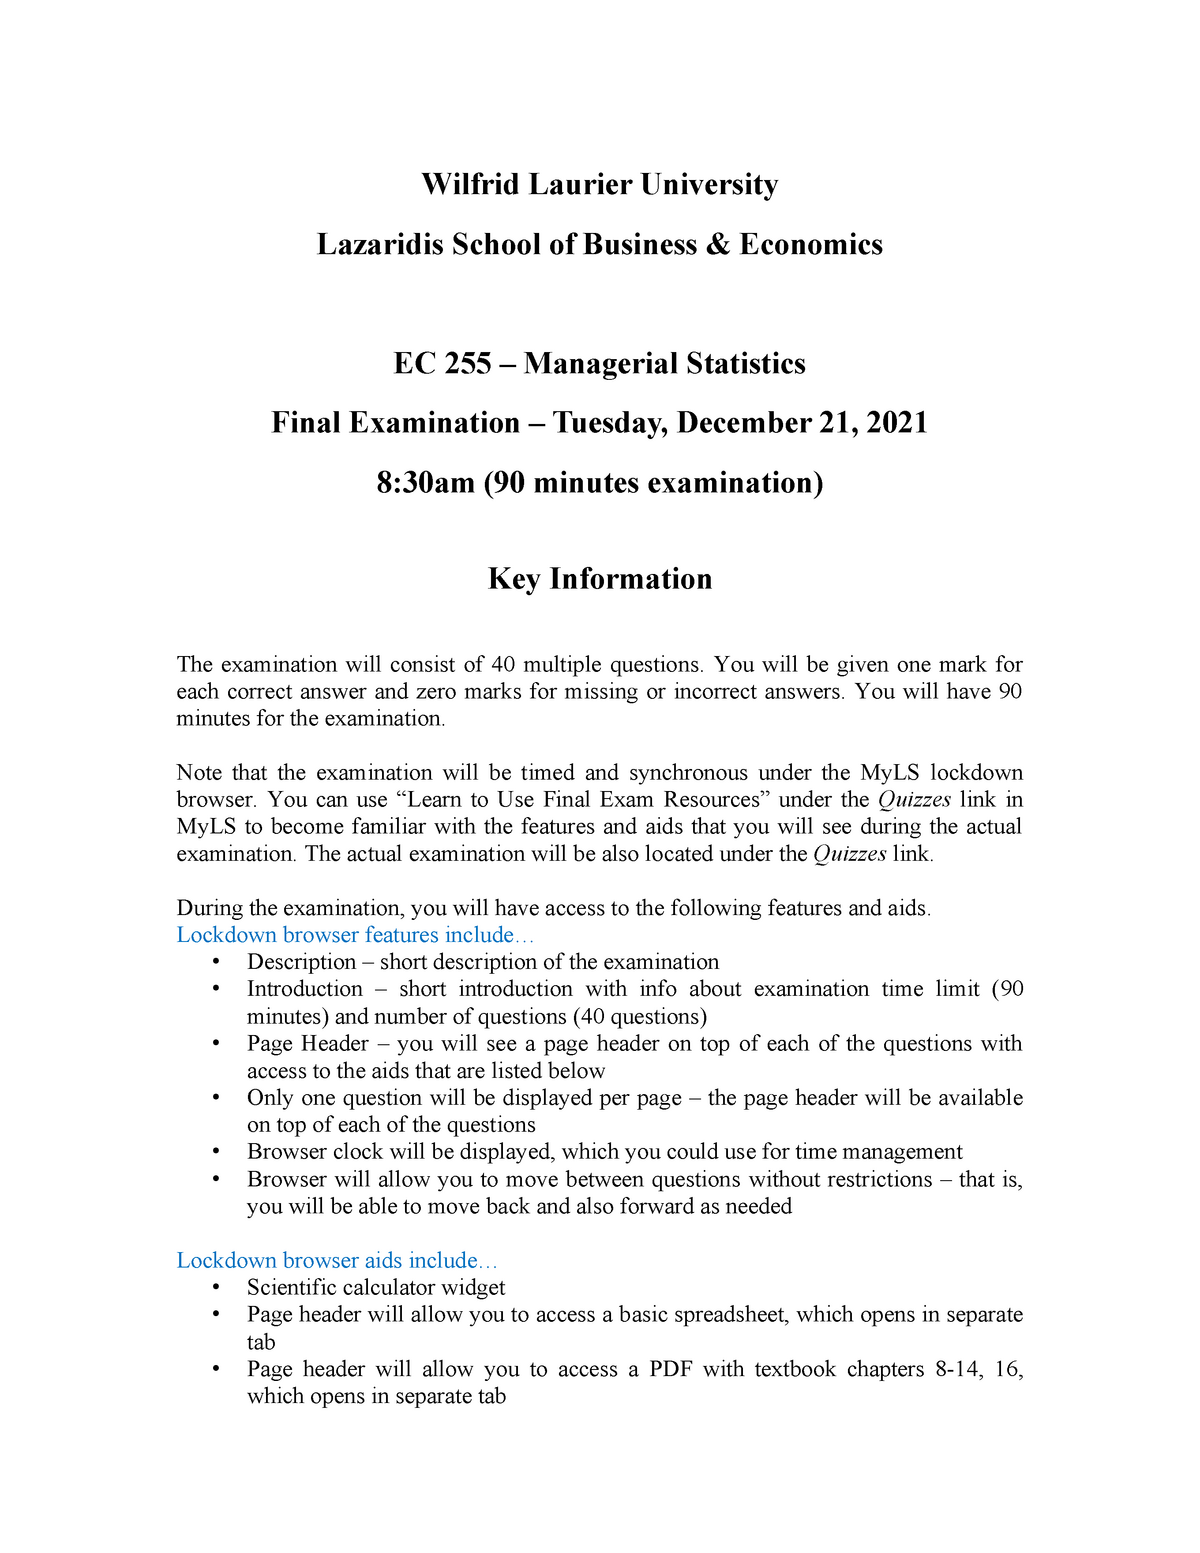 EC255 Final Exam Fall 2021 Key Information Wilfrid Laurier University